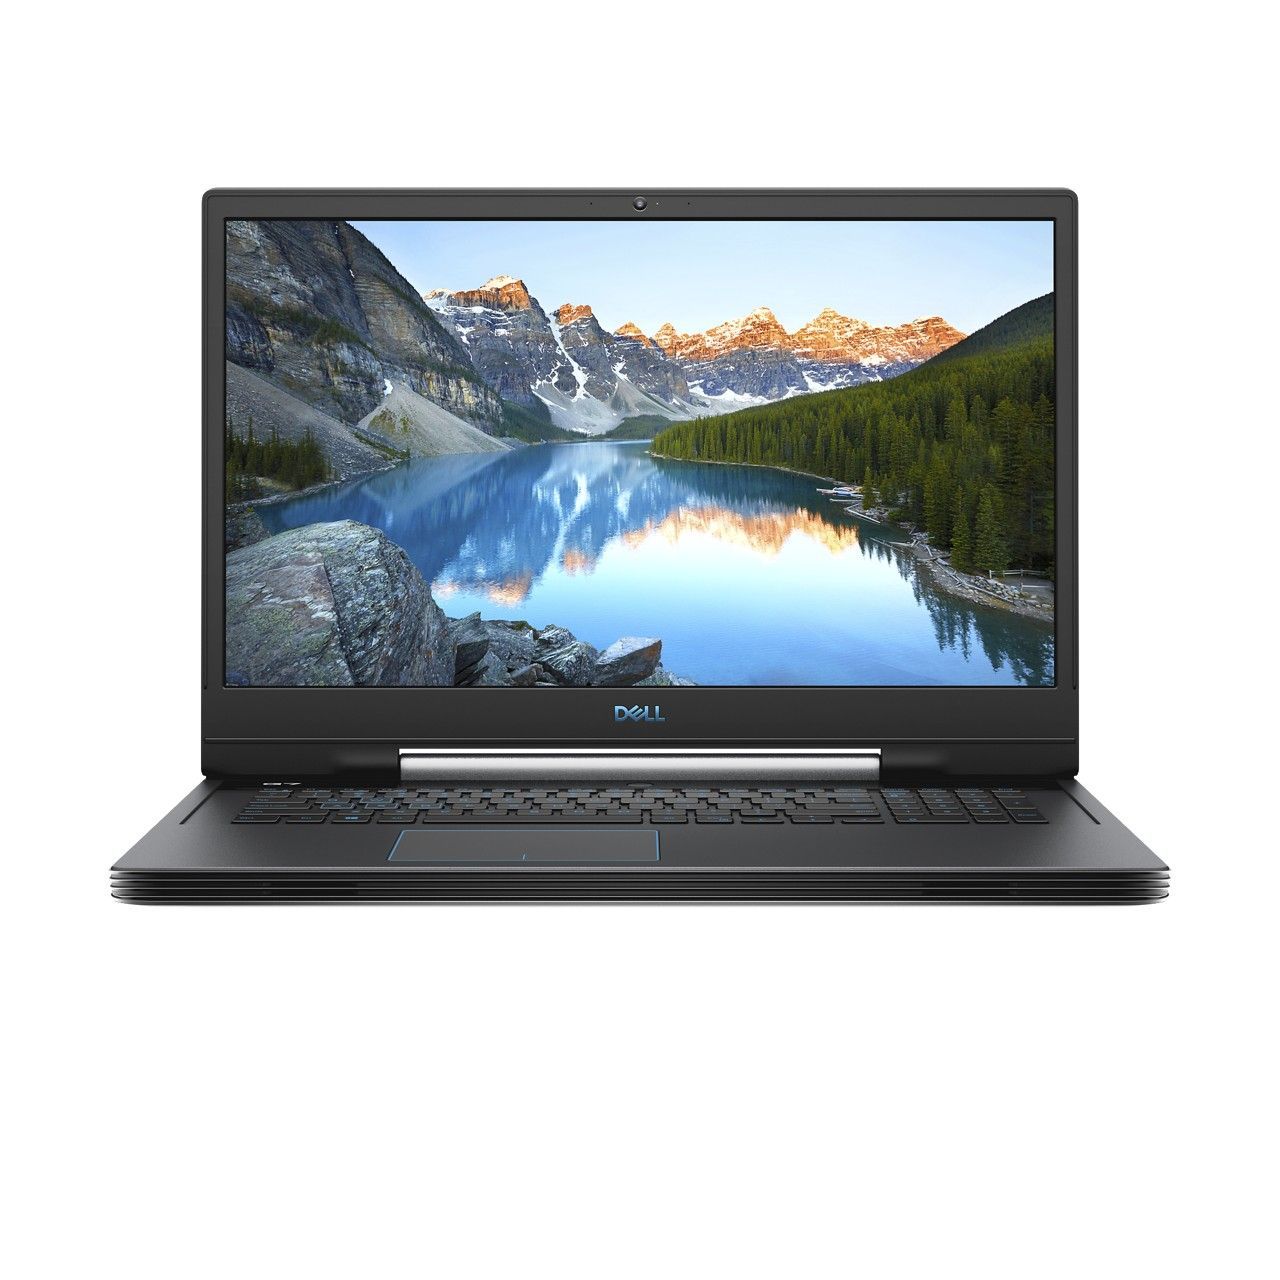 Dell G7-E1297 Gaming Laptop i7-9750H/16GB/1TB HDD + 256GB SSD/NVIDIA GeForce RTX 2070 8GB/17.3 inch FHD/144Hz Refresh Rate/Windows 10/Grey